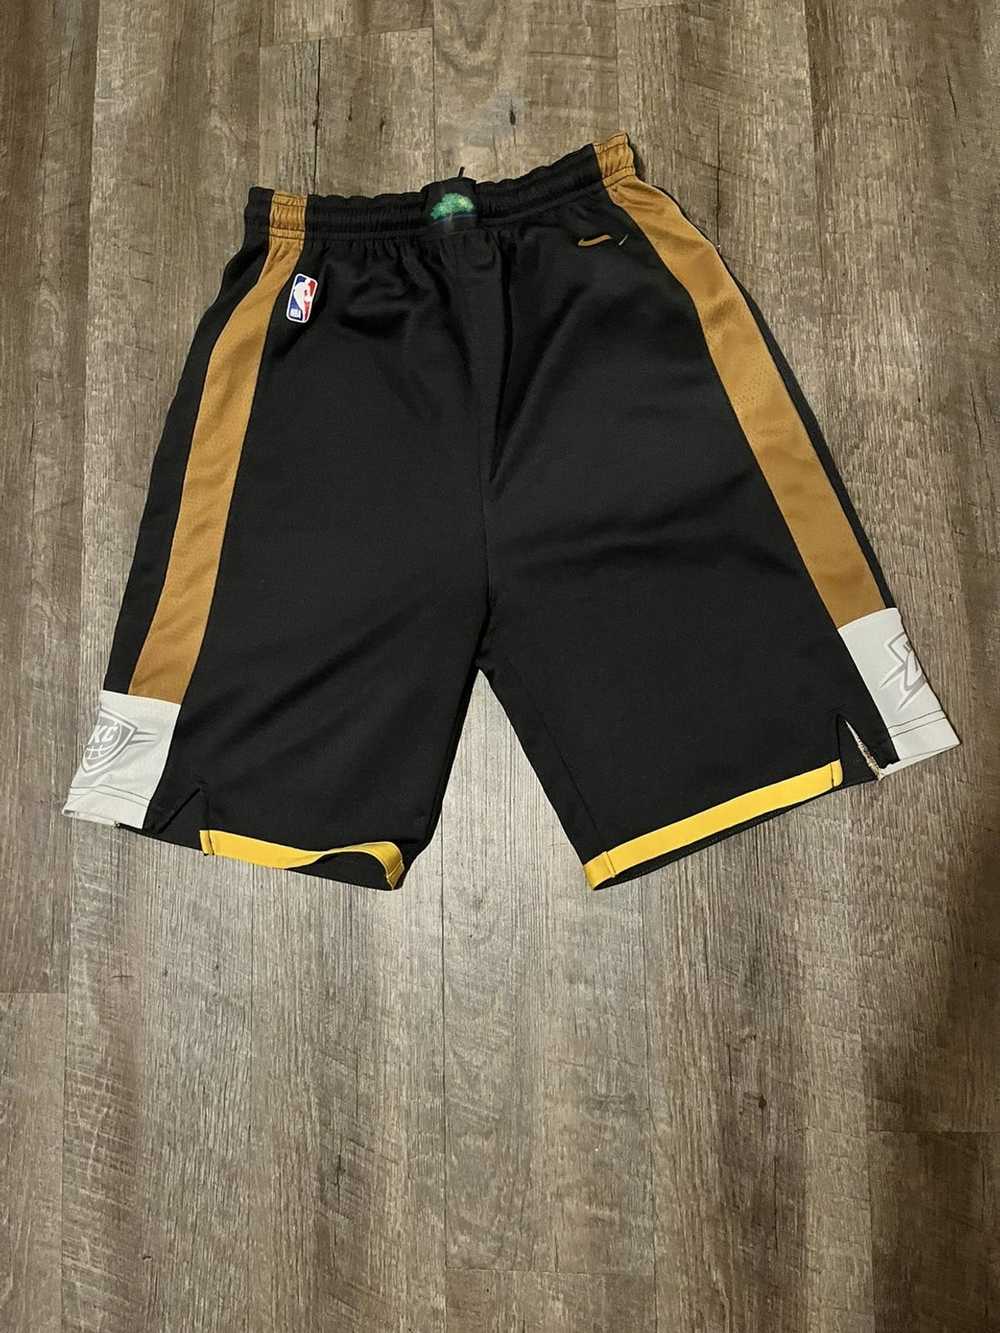 NBA NBA OKC City Shorts - image 1